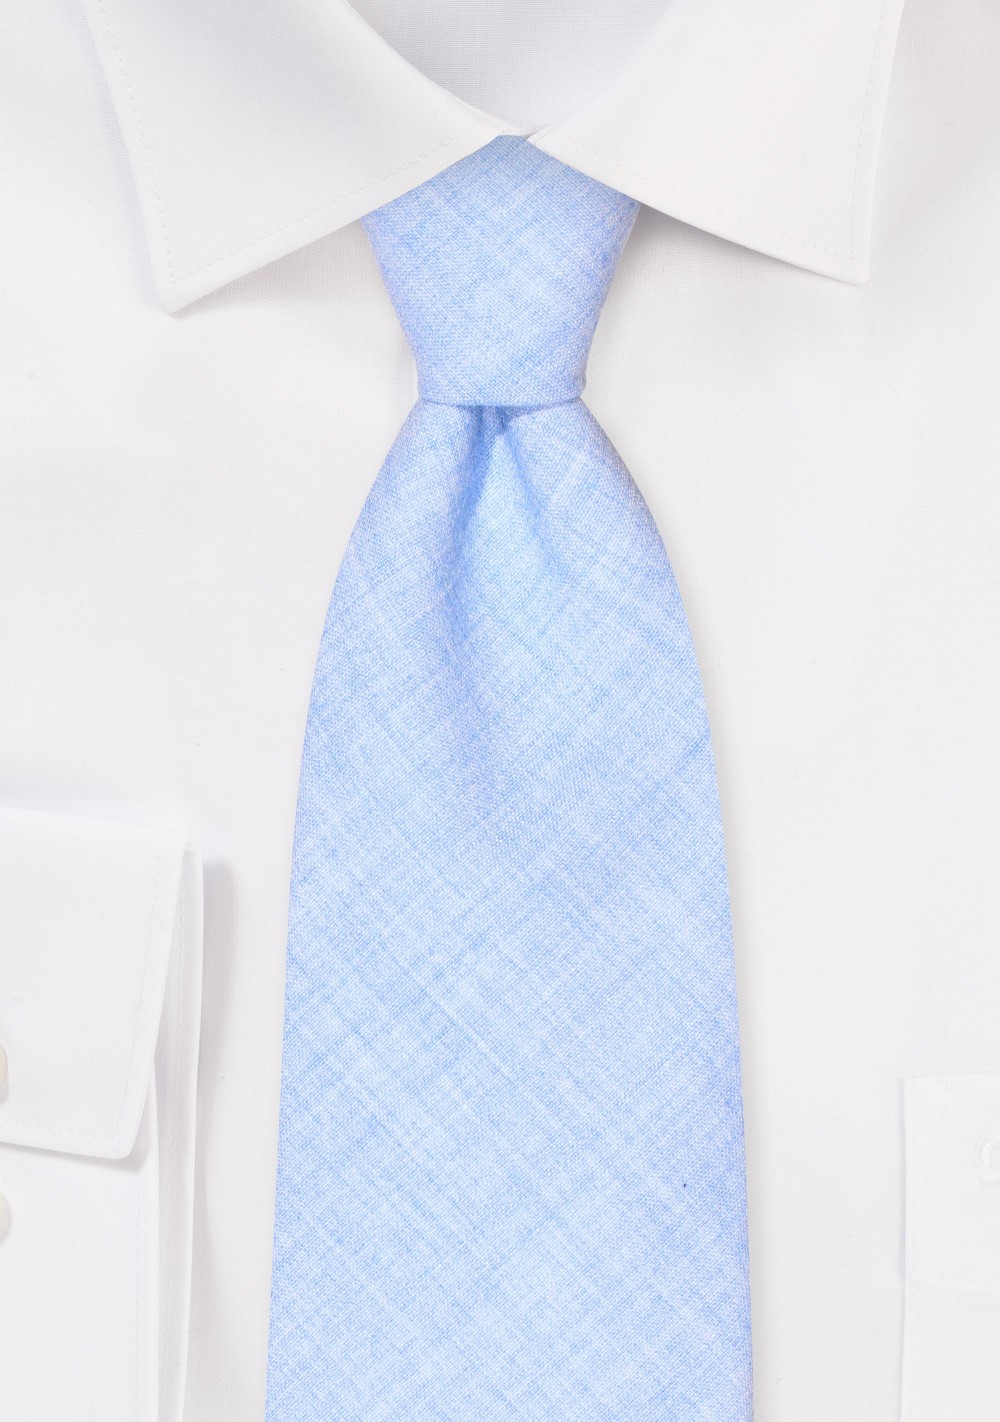 Sky Blue Mens Tie | Solid Linen Textured Tie in Sky Blue | Bows-N-Ties.com